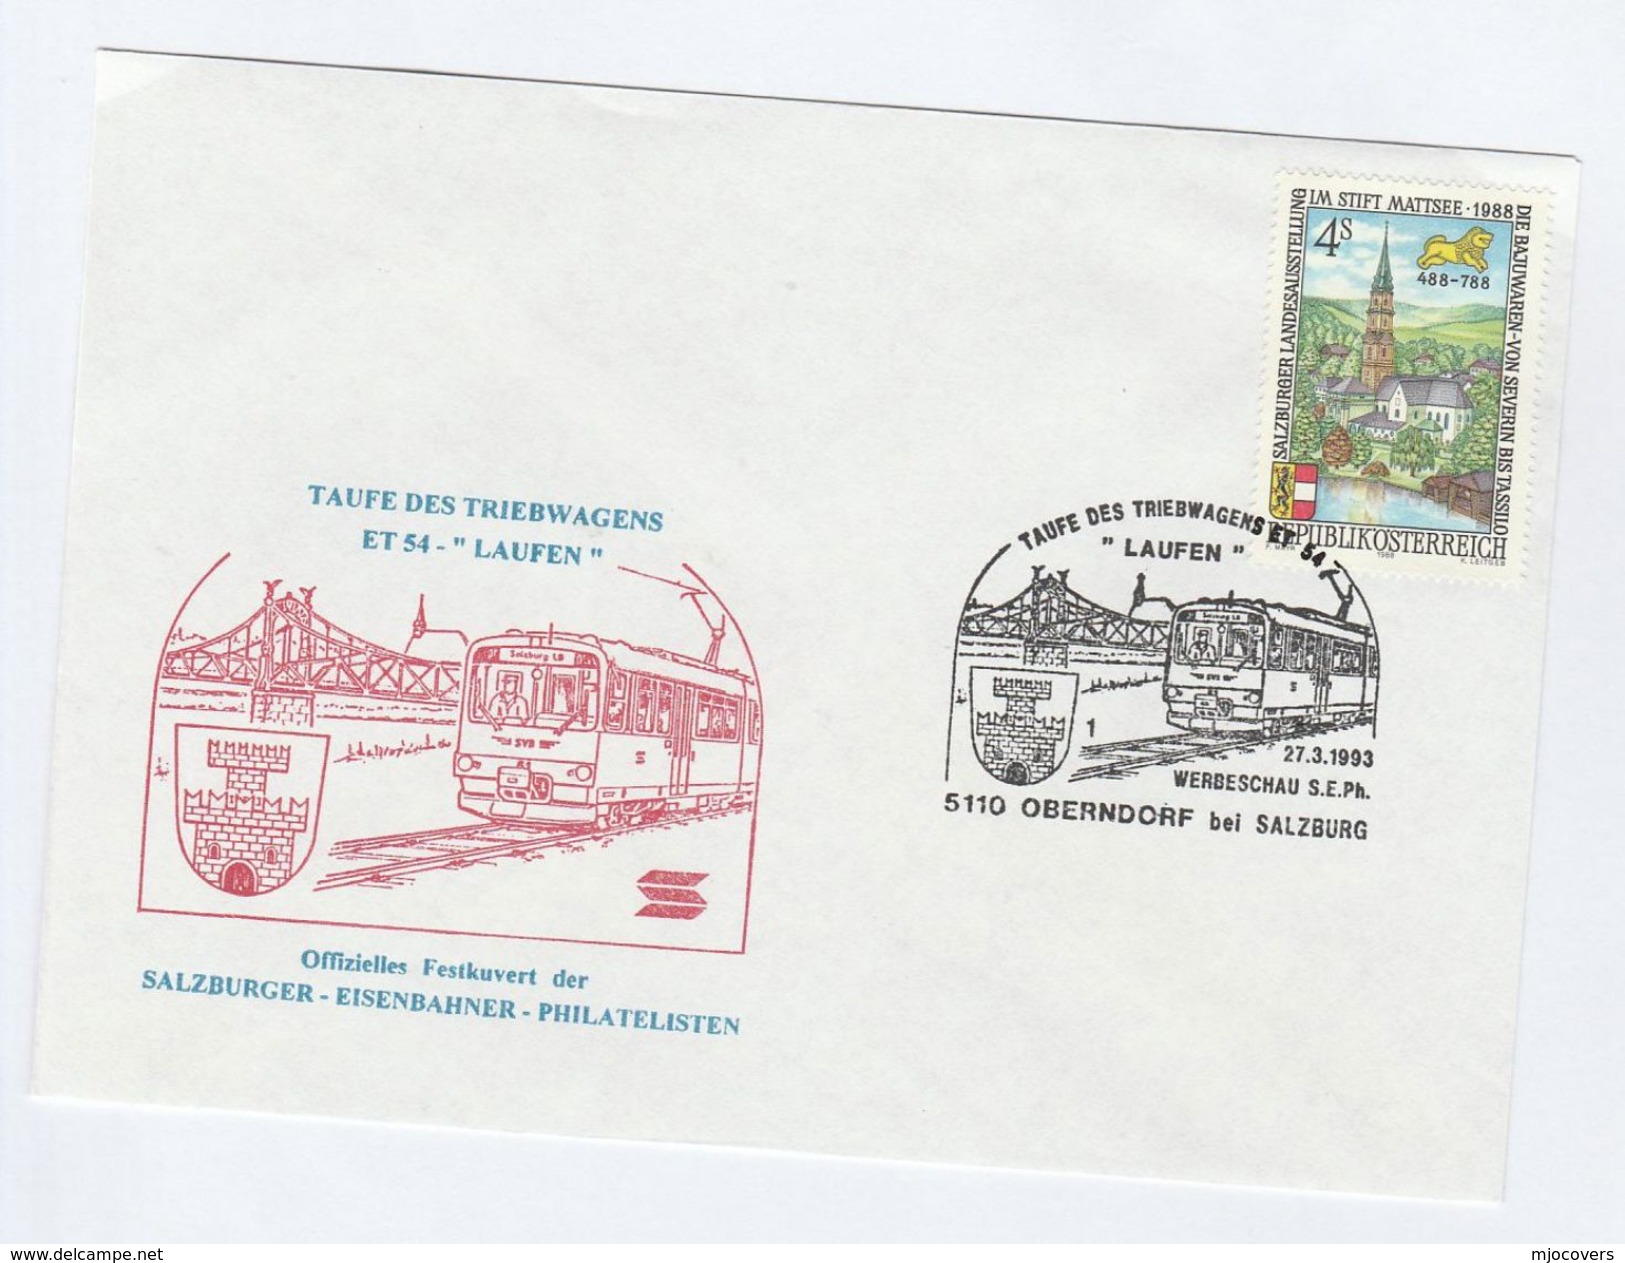 TRAIN - 1993  ET 54 'LAUFEN' Railway INAUGURATION Event COVER  AUSTRIA  Stamps - Trains